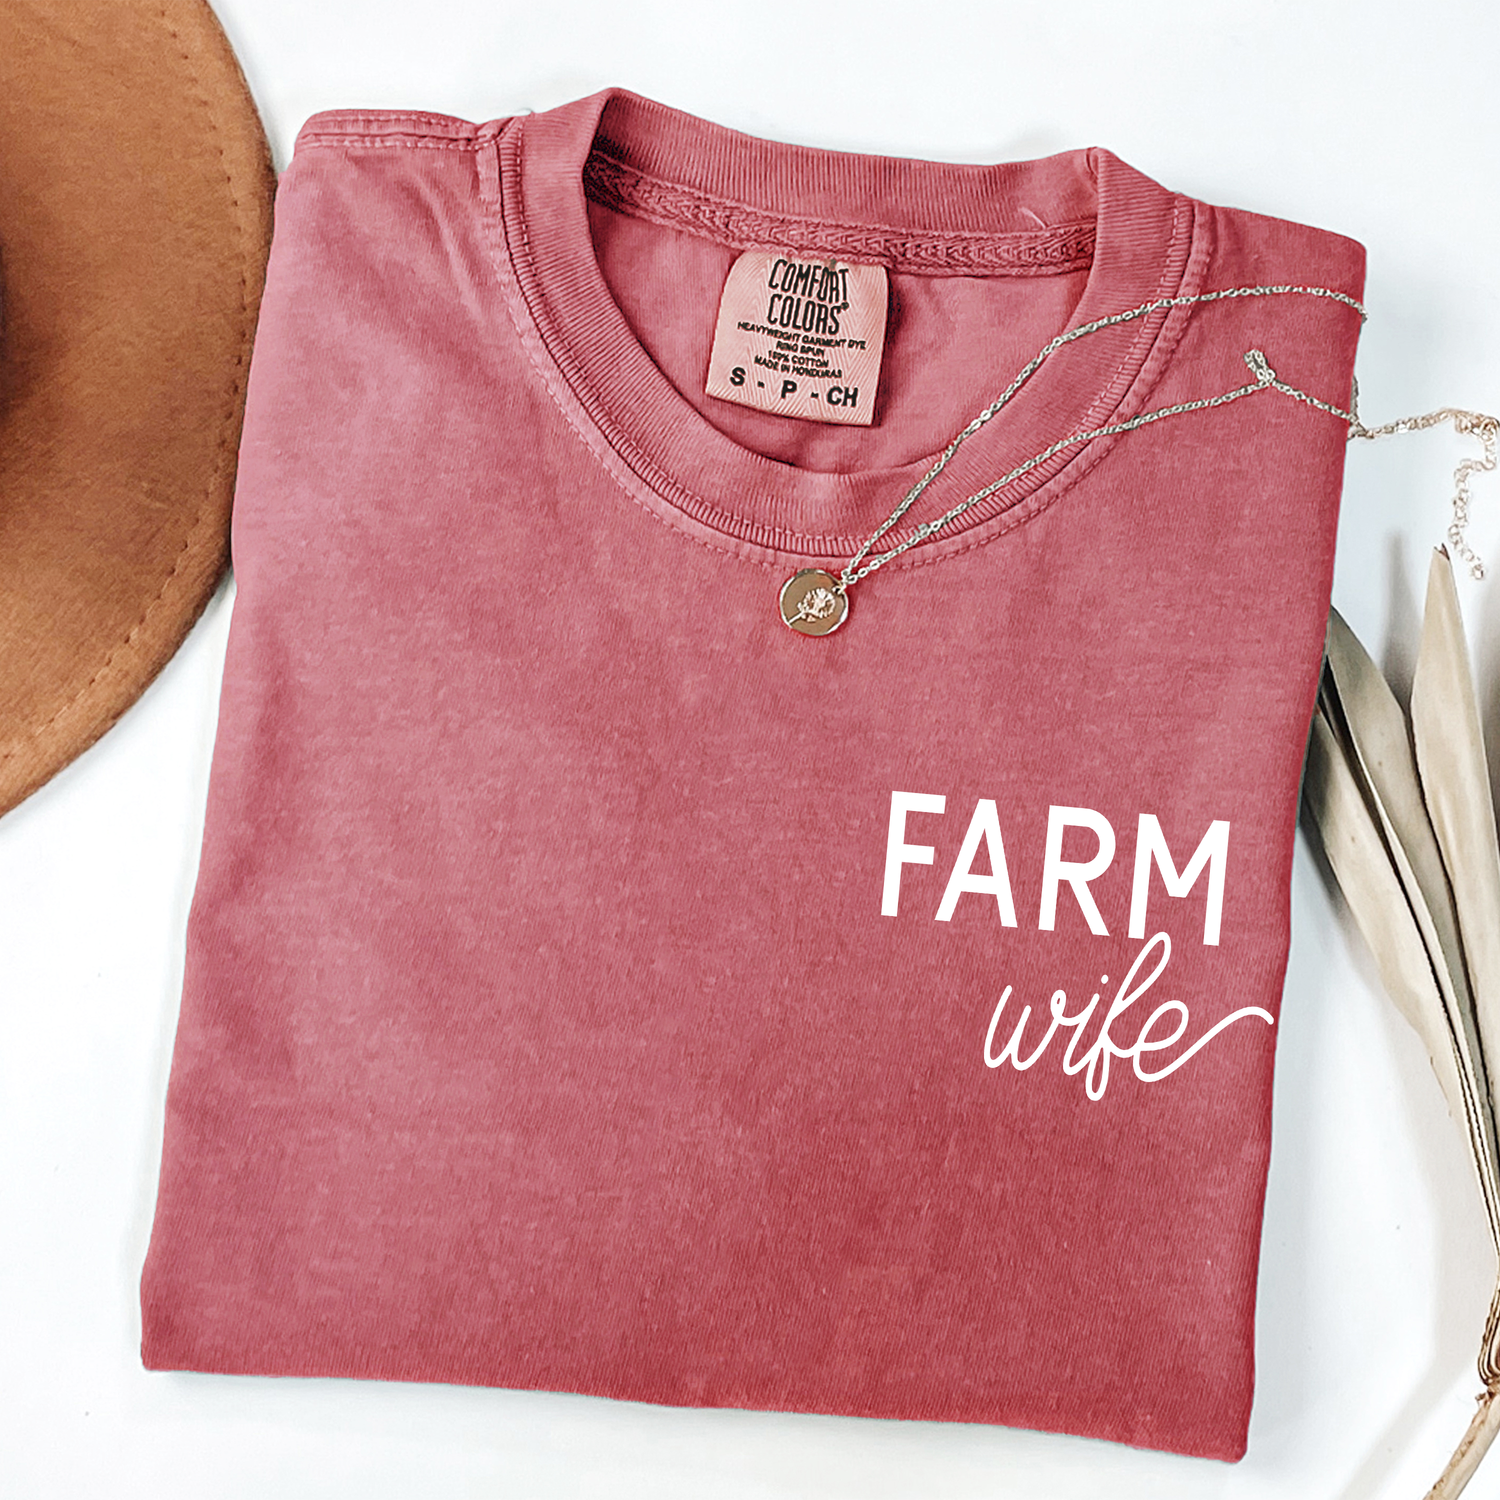 FARM WIFE - Crimson Graphic Tee